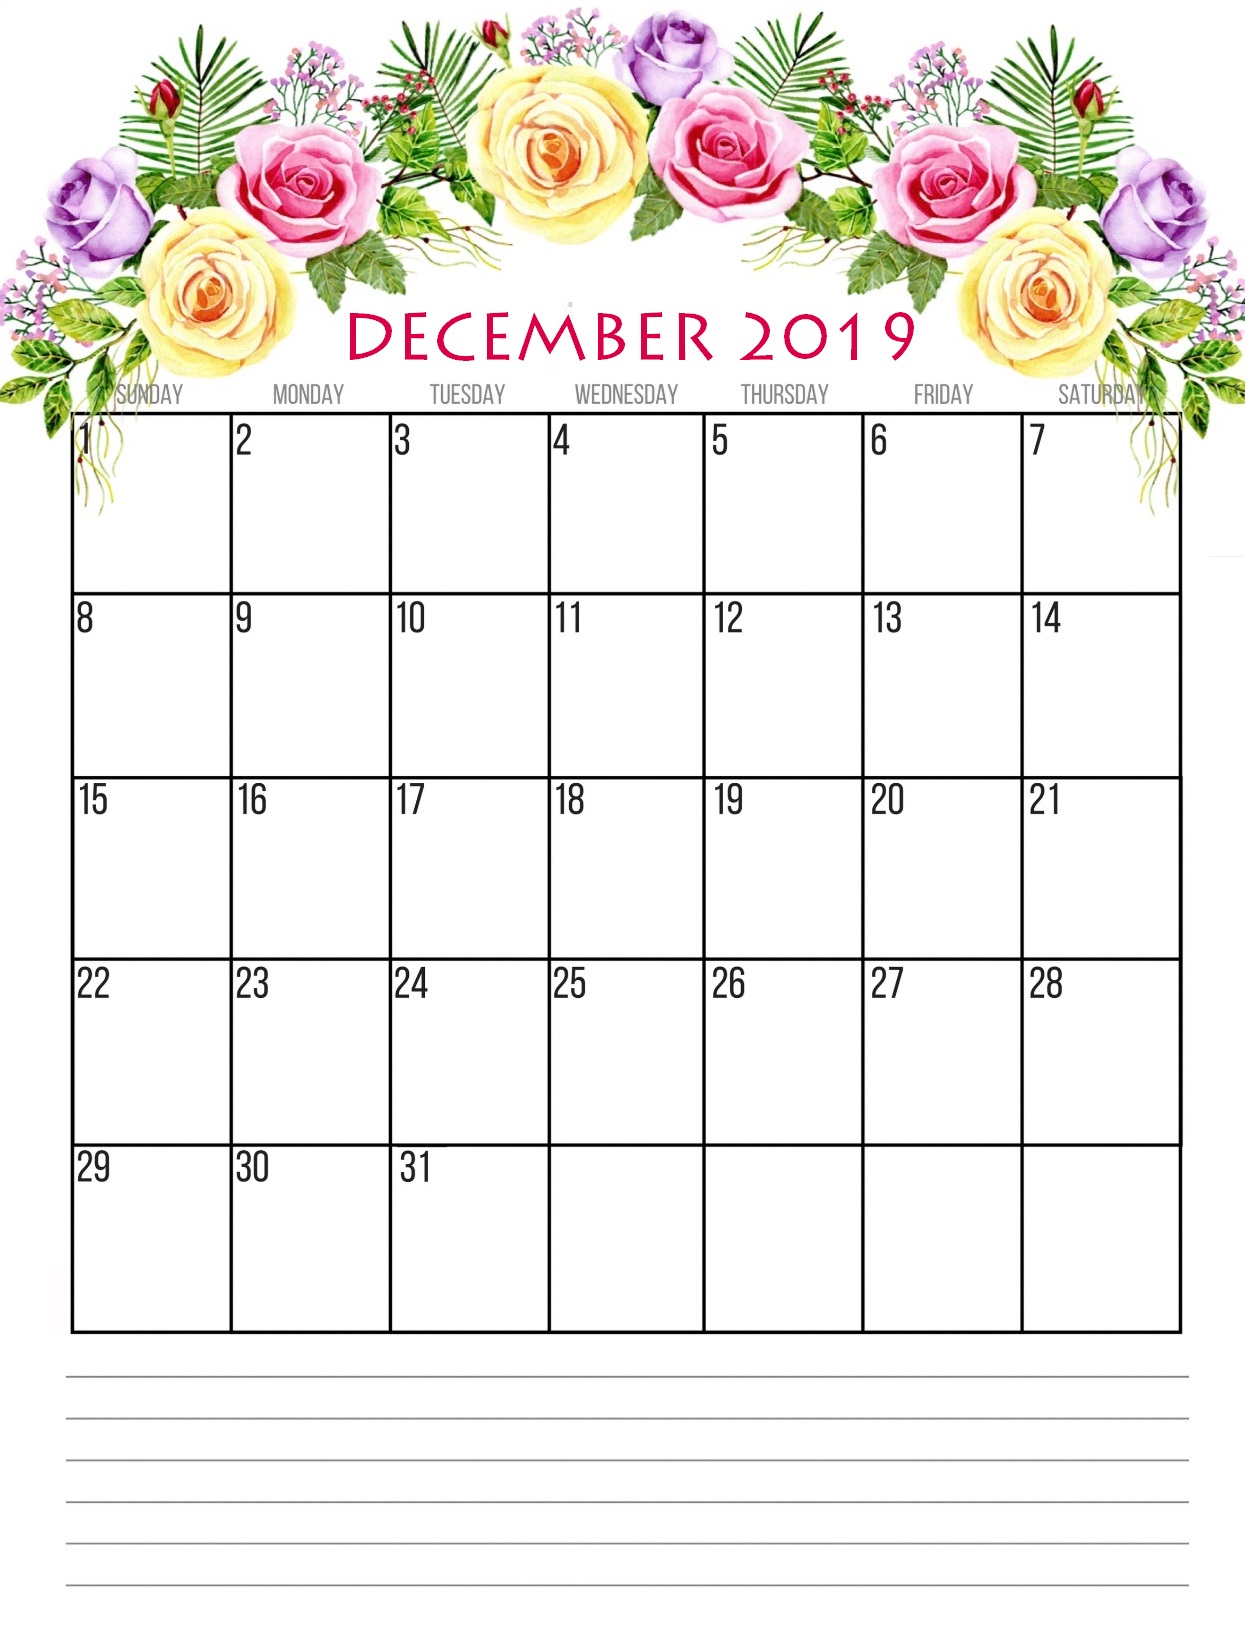 December 2019 Floral Calendar